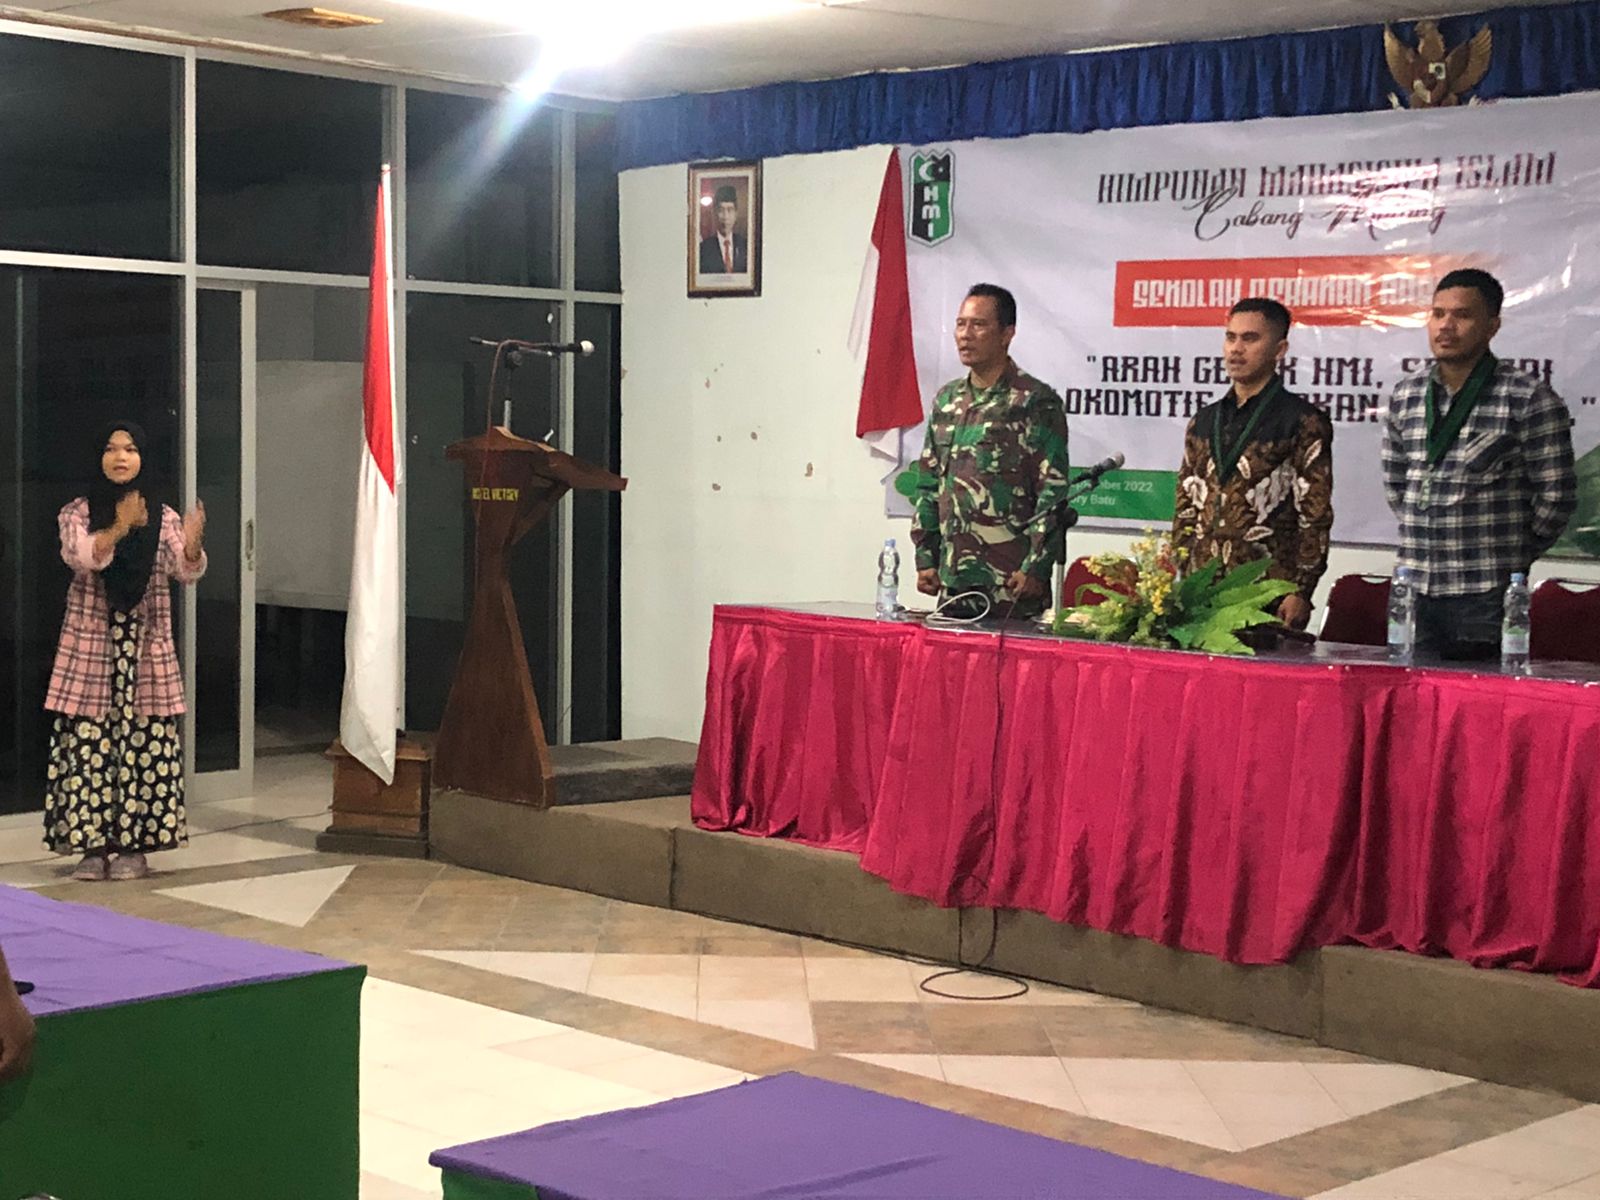 HMI Cabang Malang Adakan Event Sekolah Gerakan Nasional